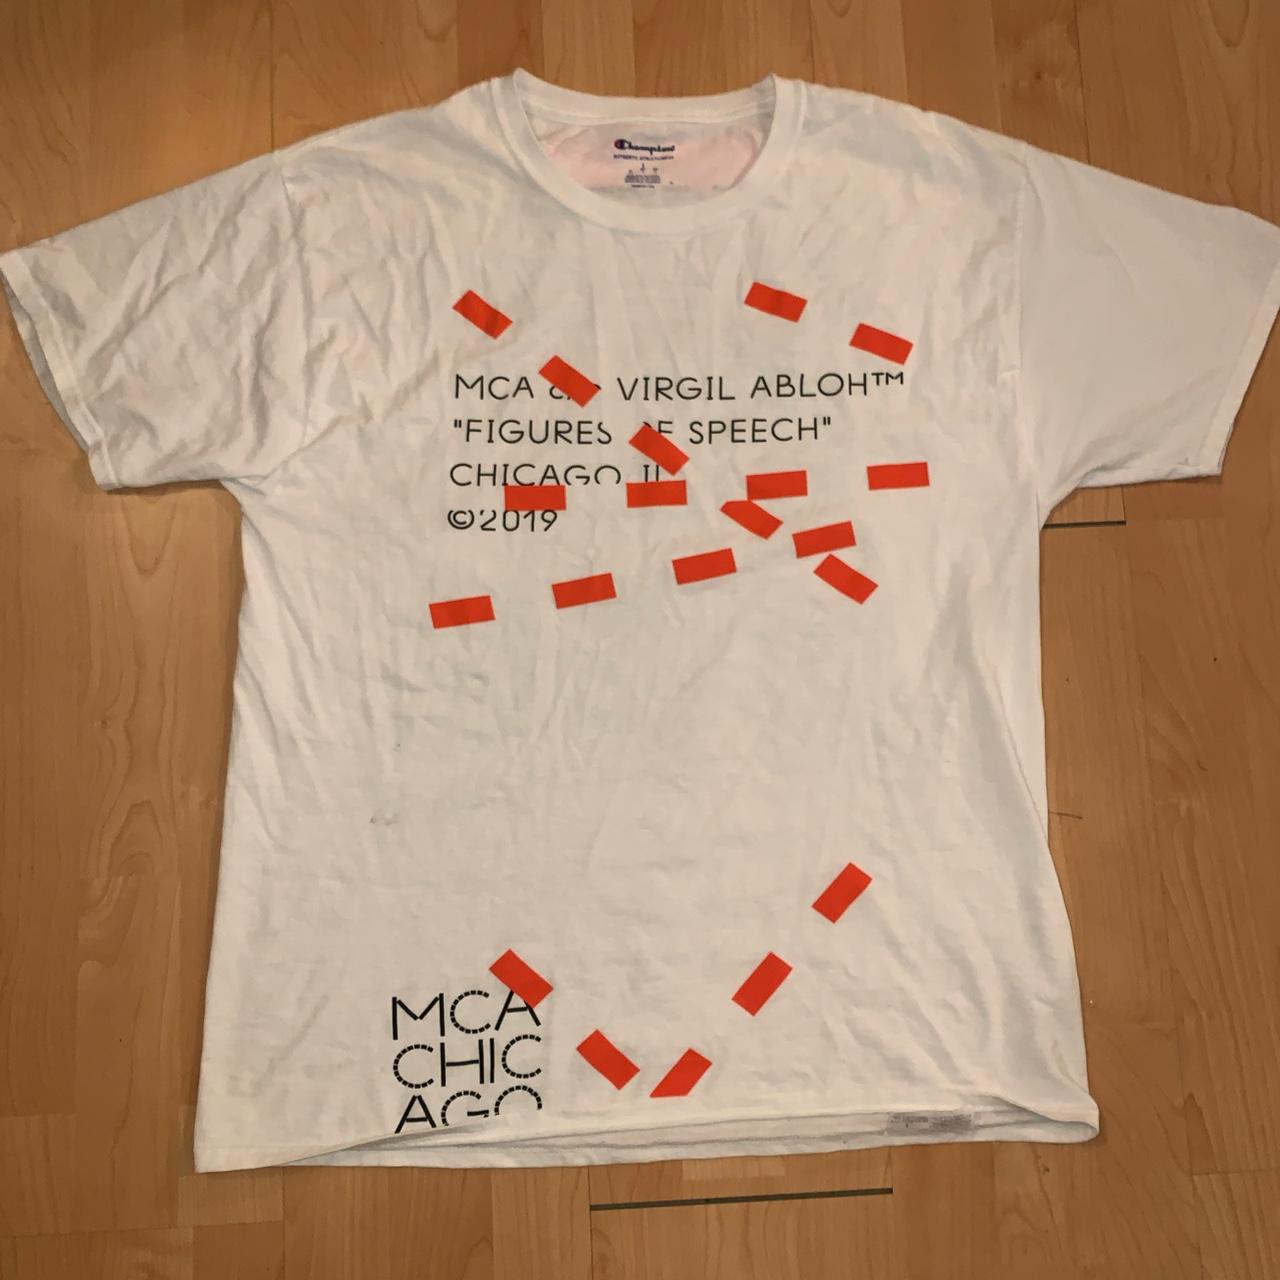 MCA Chicago virgil abloh off white tee shirt never worn - Depop